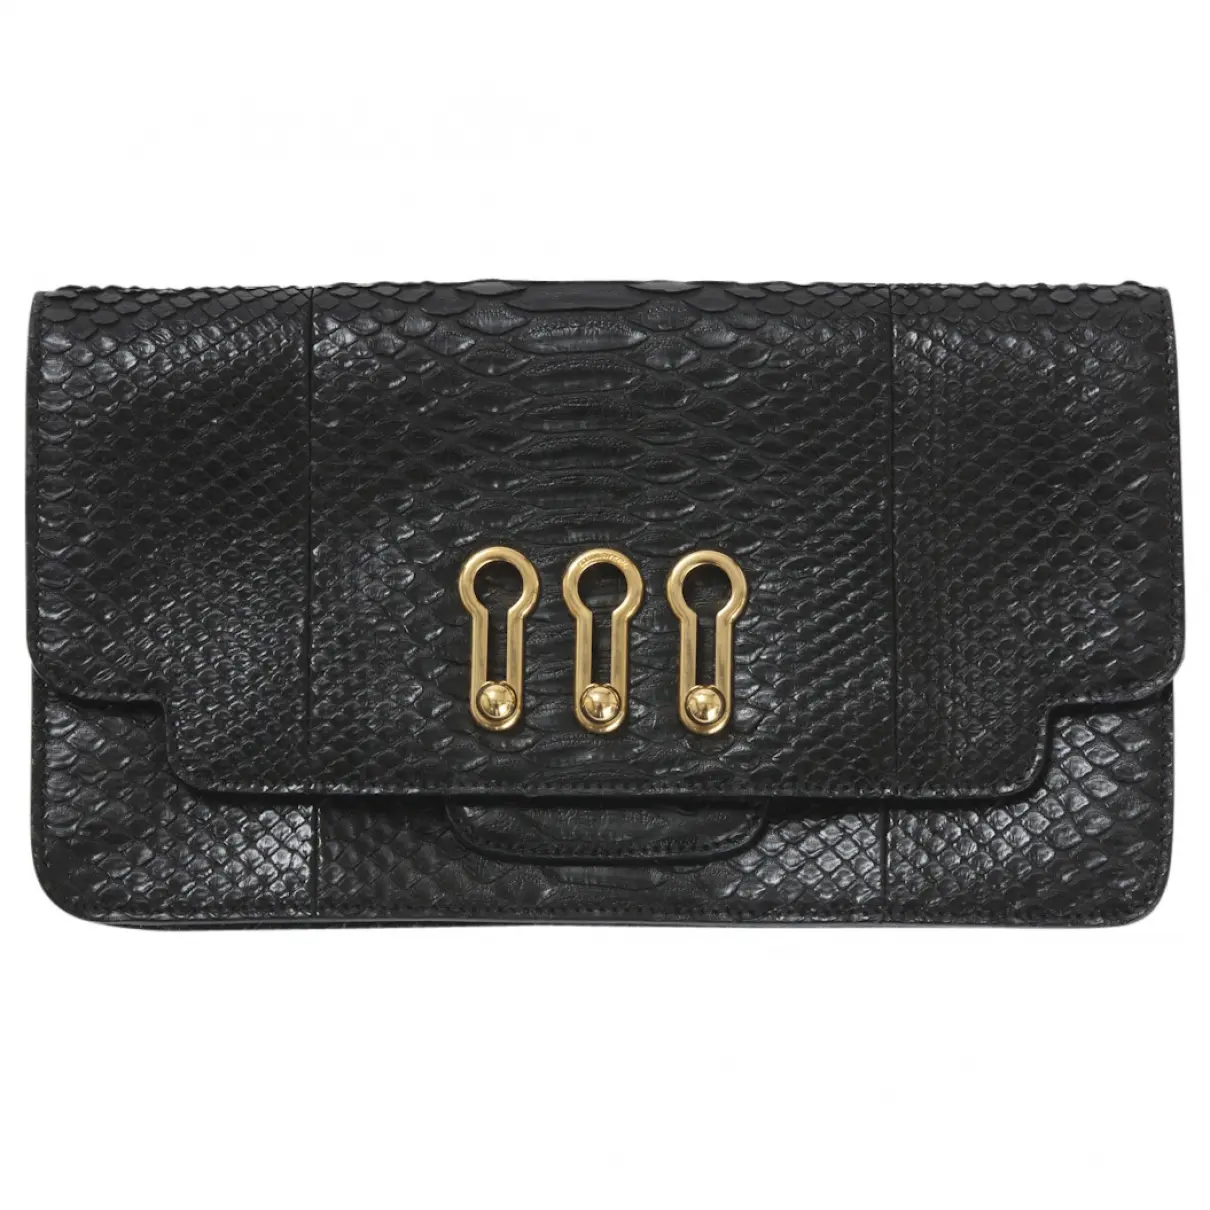 Black Exotic leathers Clutch bag Sonia Rykiel